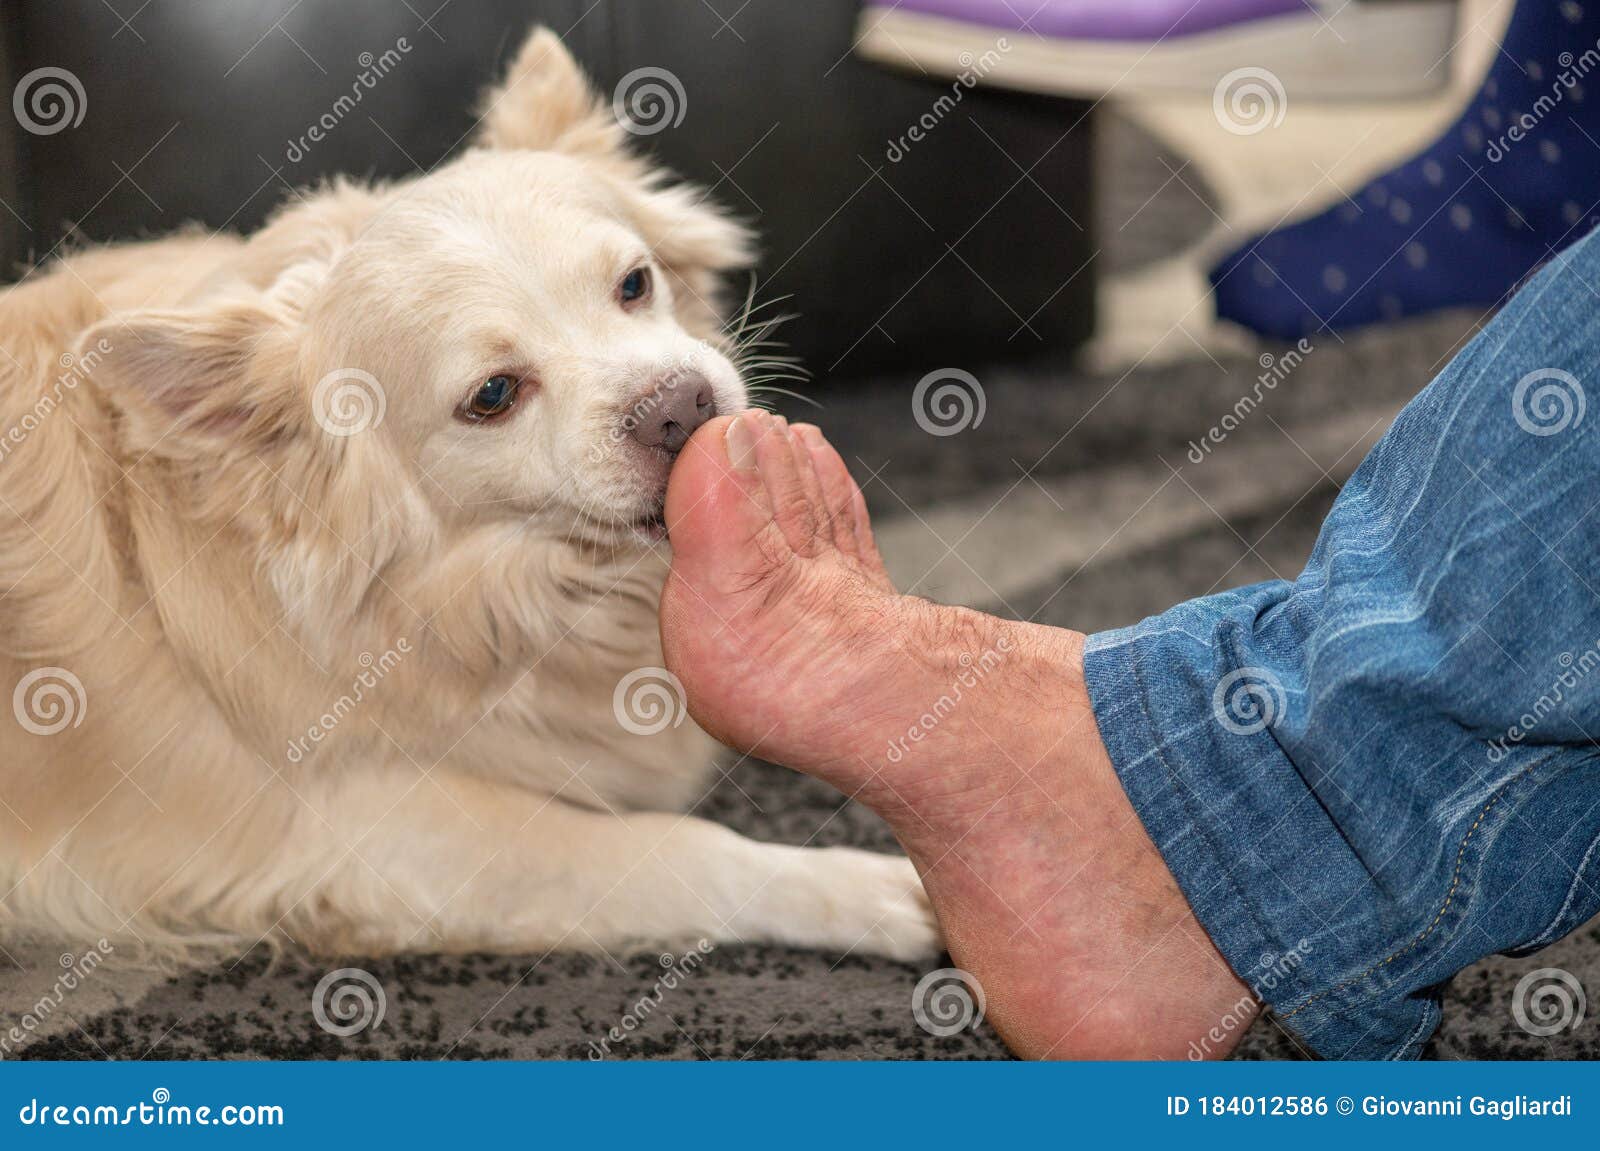 woman licking man's feet